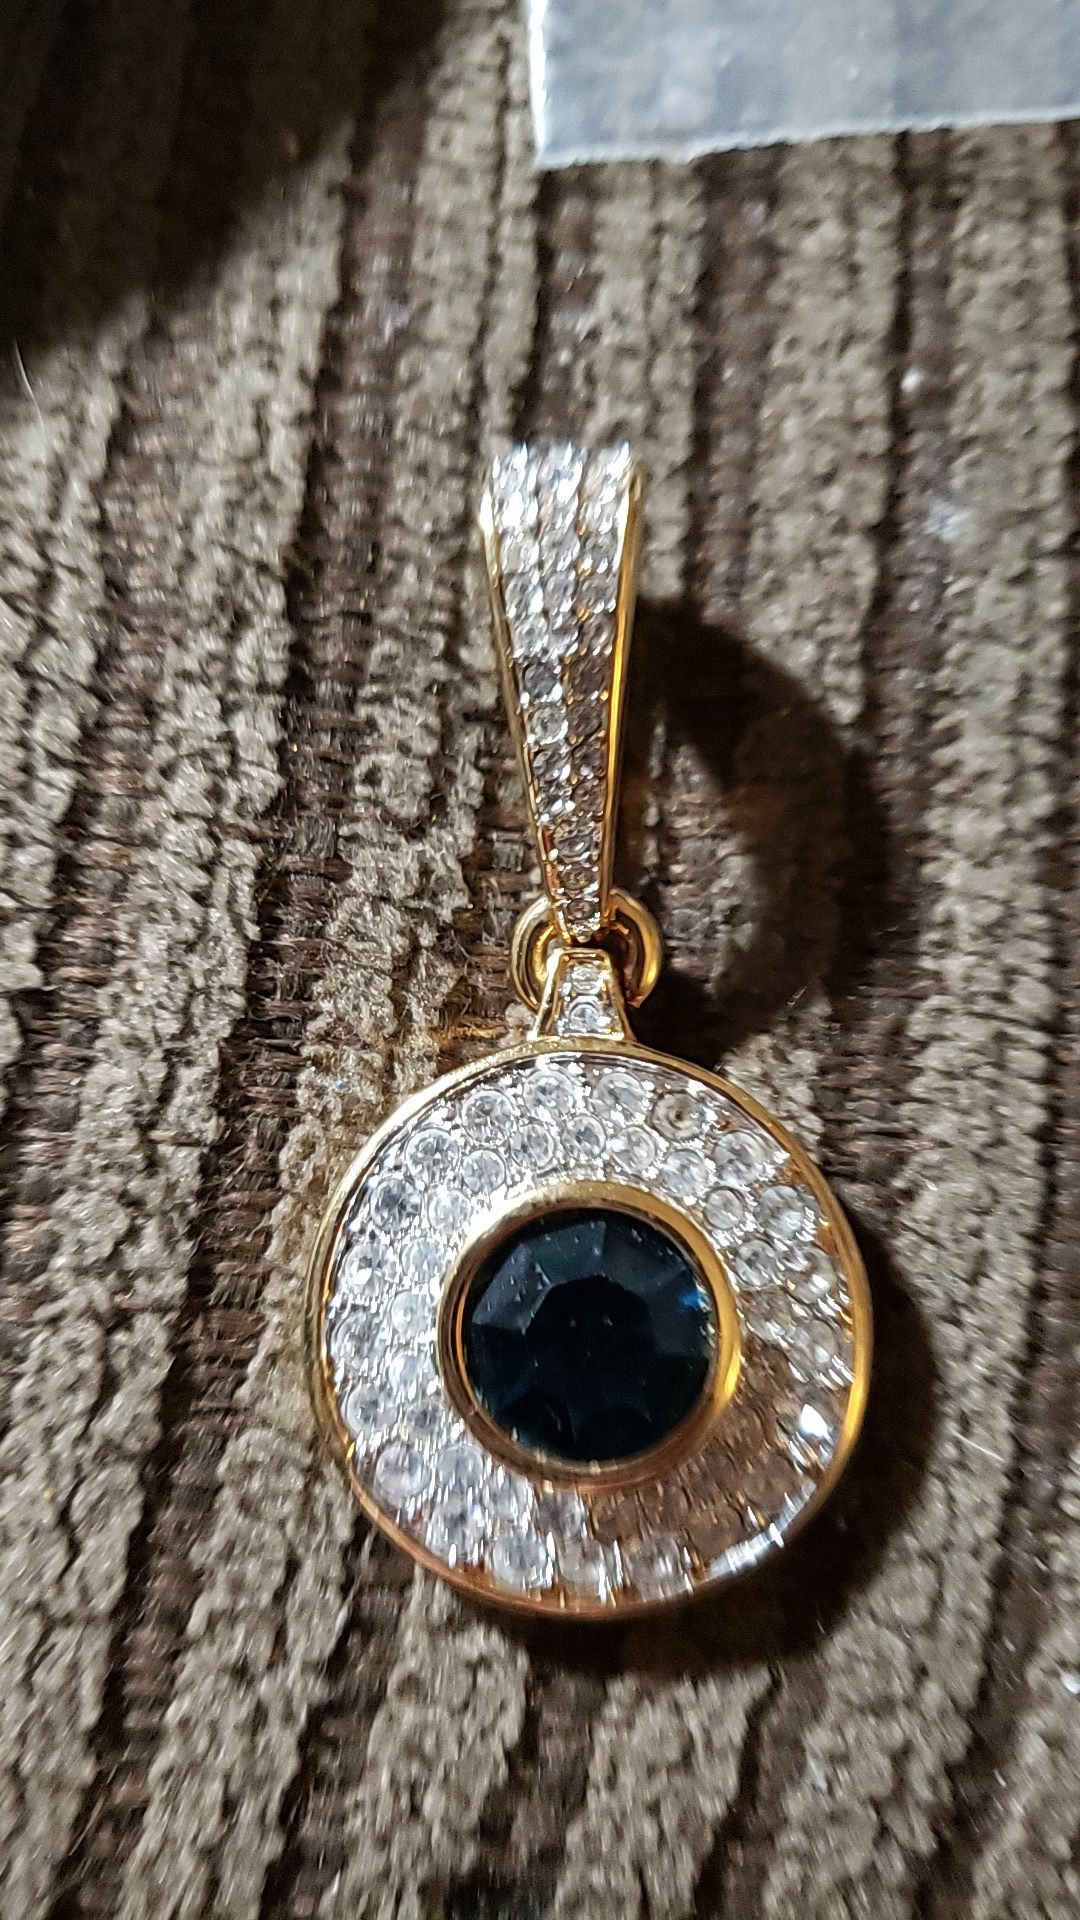 Swarovski Crystal gold tone pendant. Blue sapphire center stone and Crystal's all around